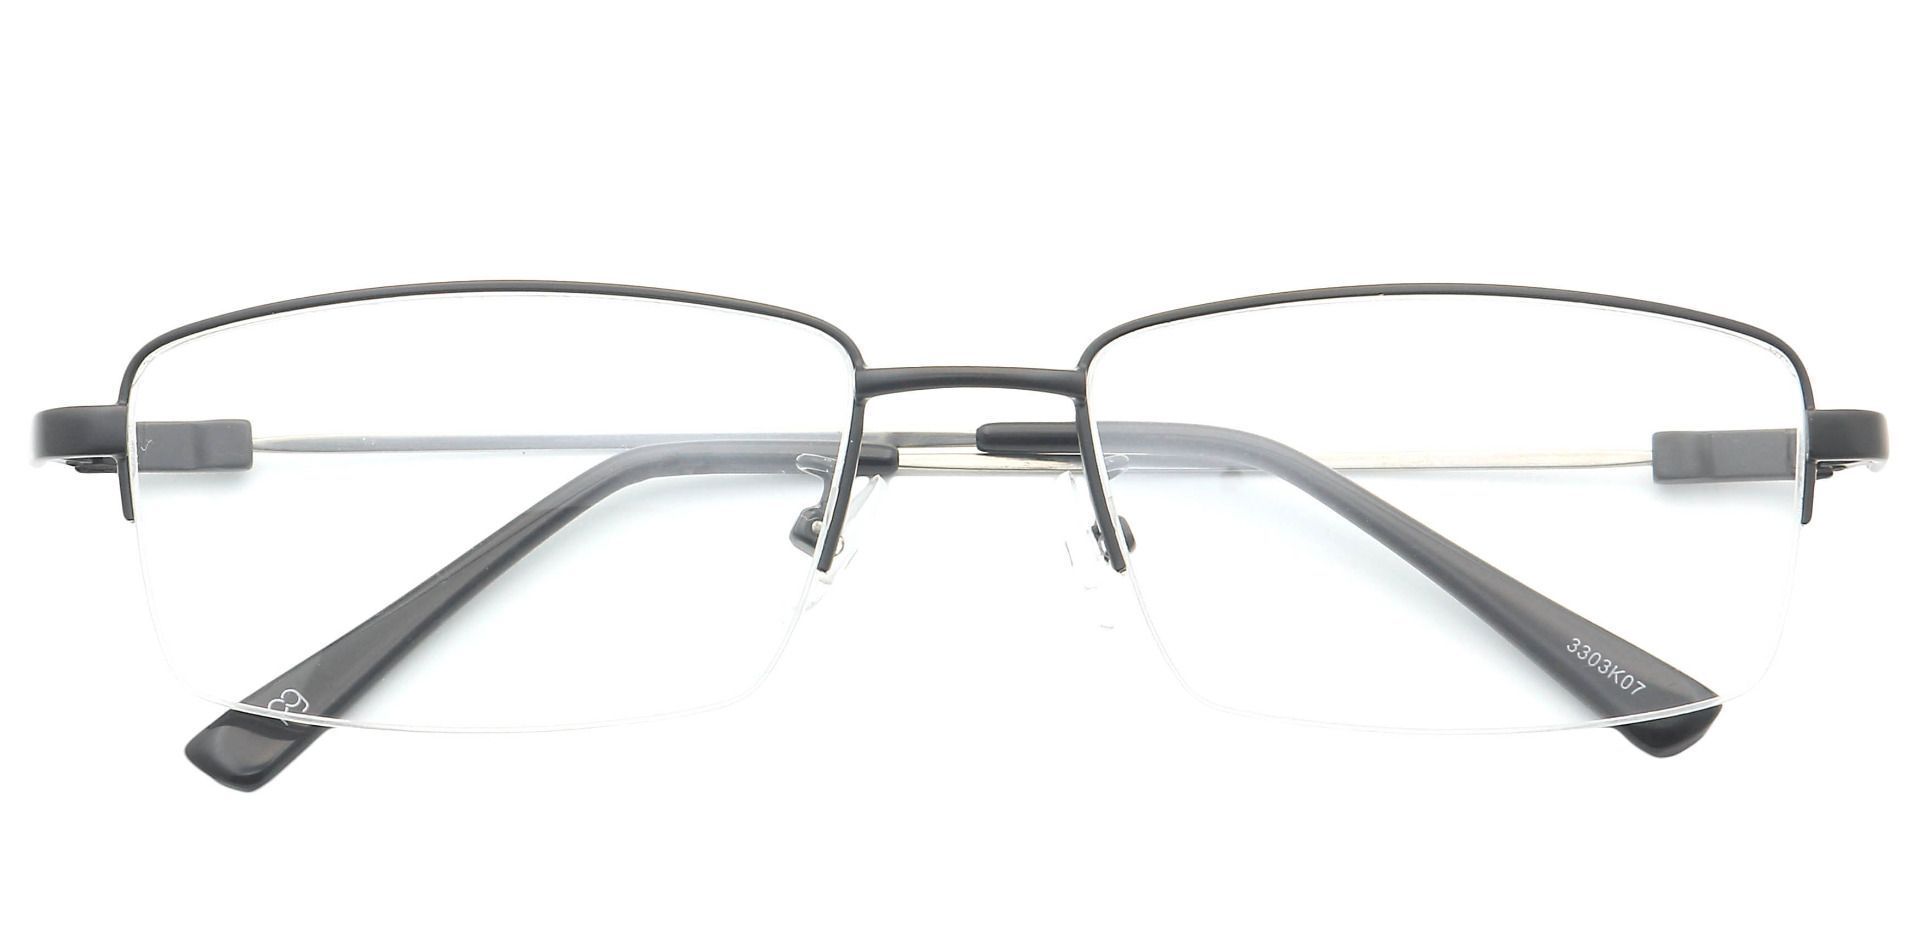 Zander Rectangle Lined Bifocal Glasses - Black